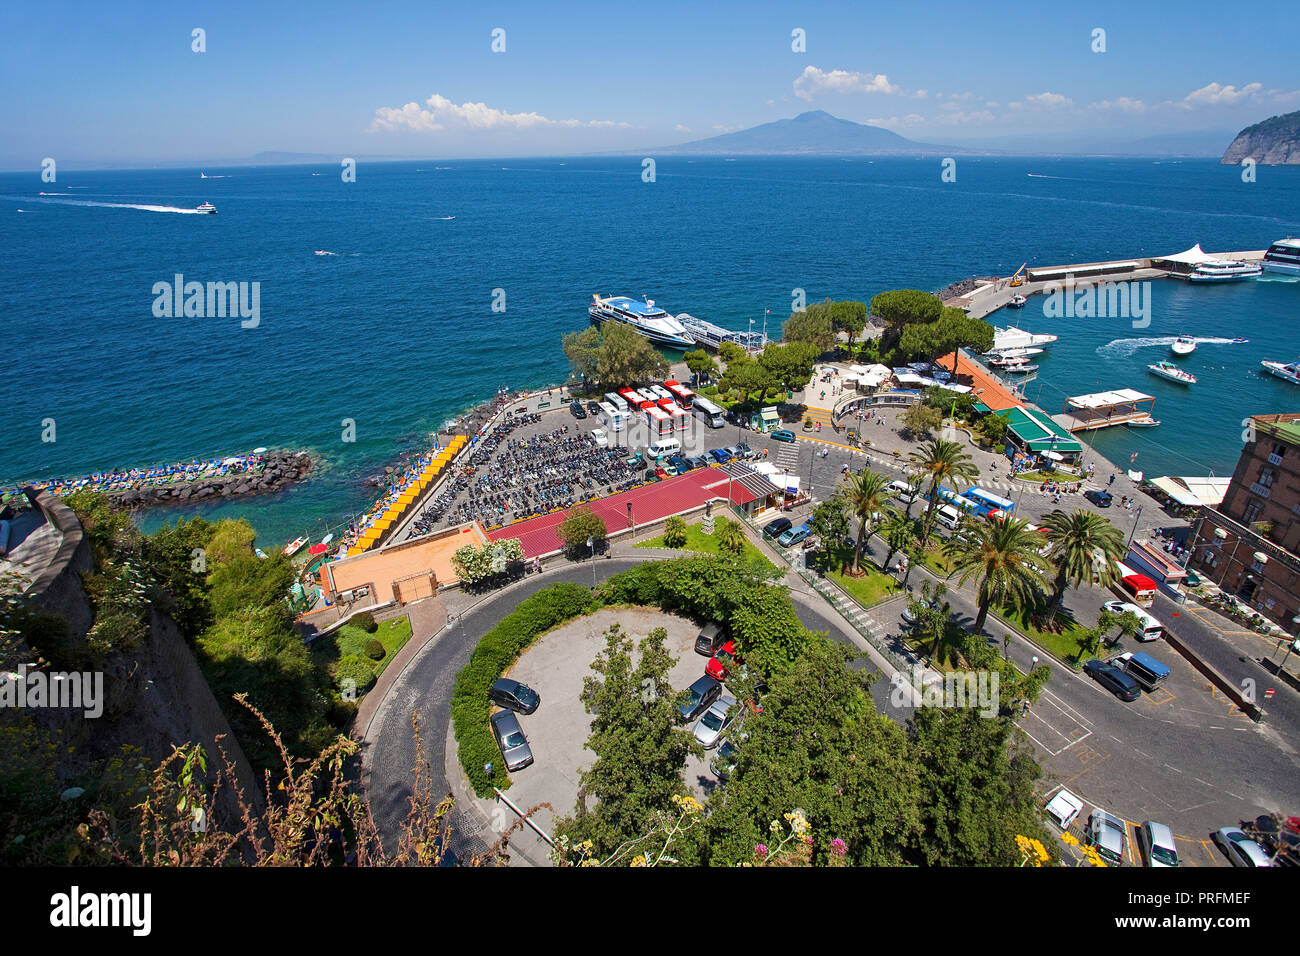 View on the harbour Marina Grande and the coast, Sorrento, Peninsula of Sorrento, Gulf of Naples, Campania, Italy Stock Photo